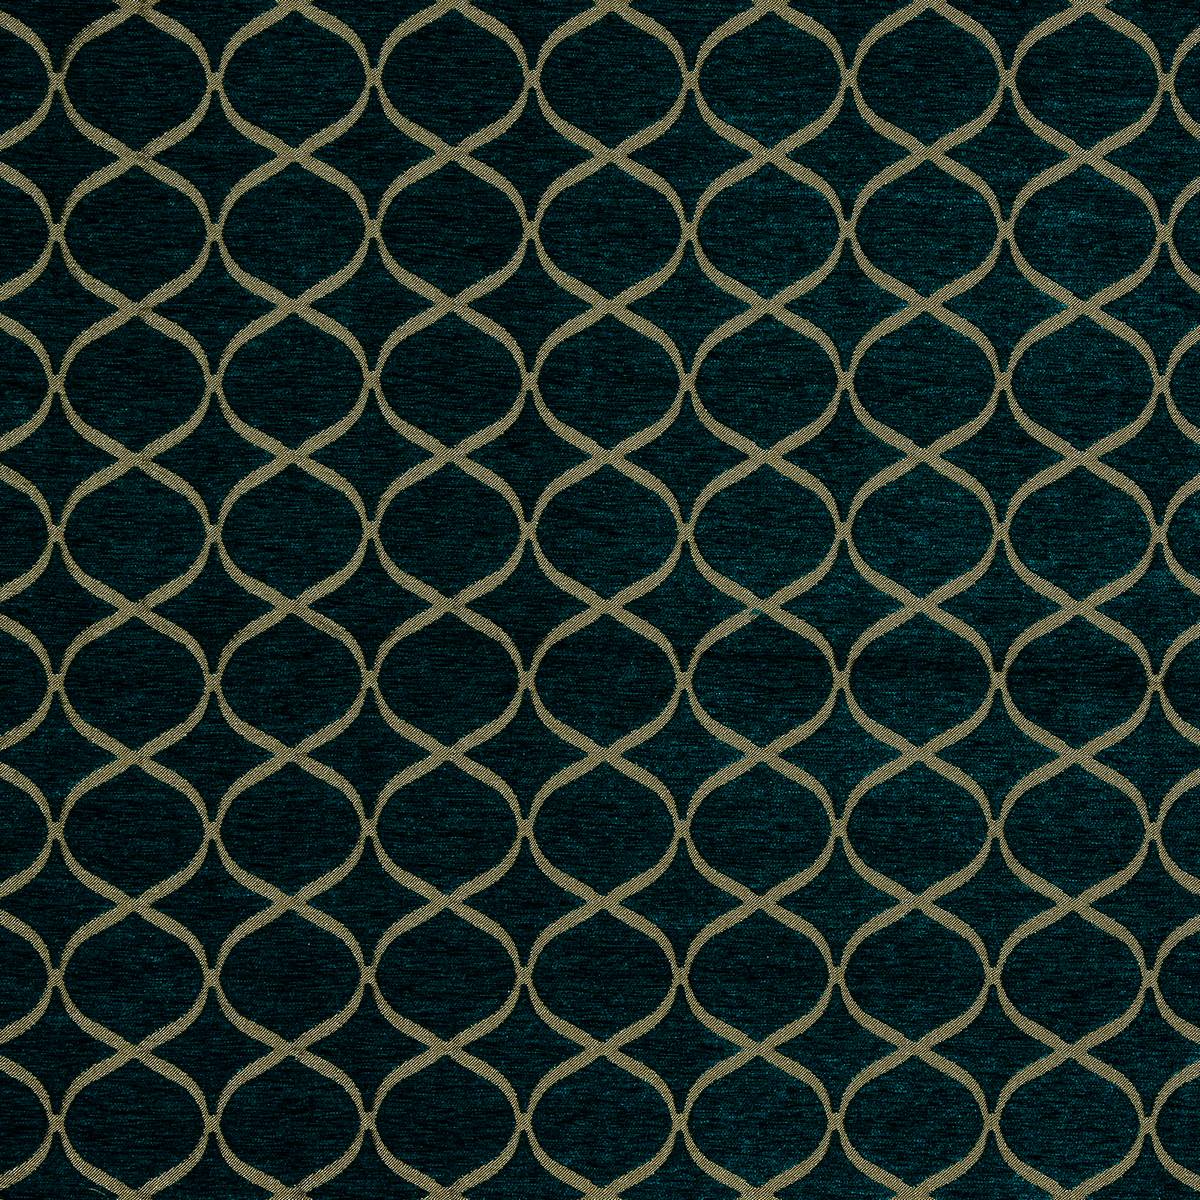 Trellis Teal Fabric by Fryetts